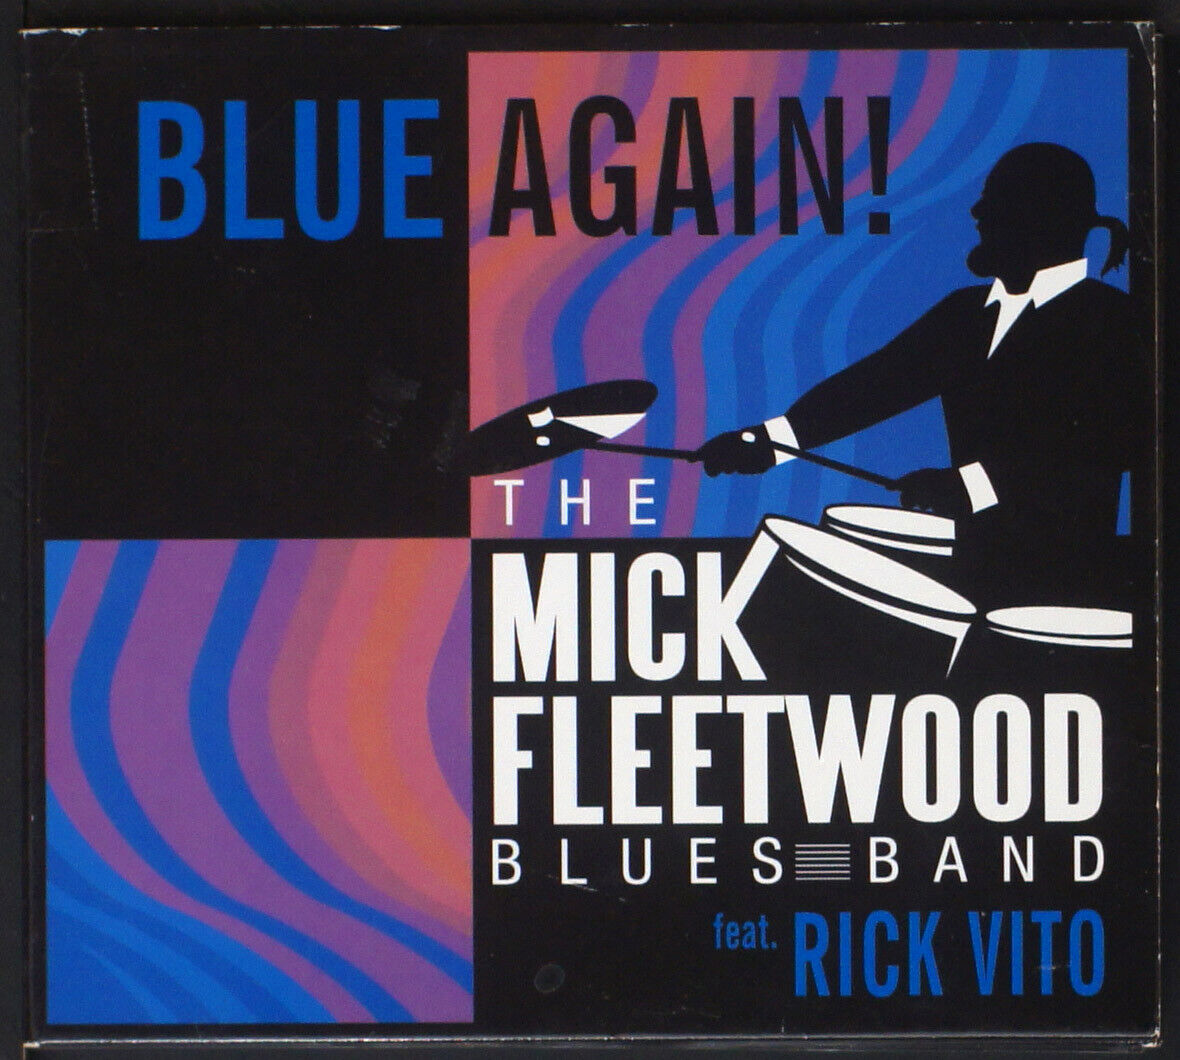 The Mick Fleetwood Blues Band & Rick Vito - Blue Again [21] (EX/EX)2xCD GERMANY